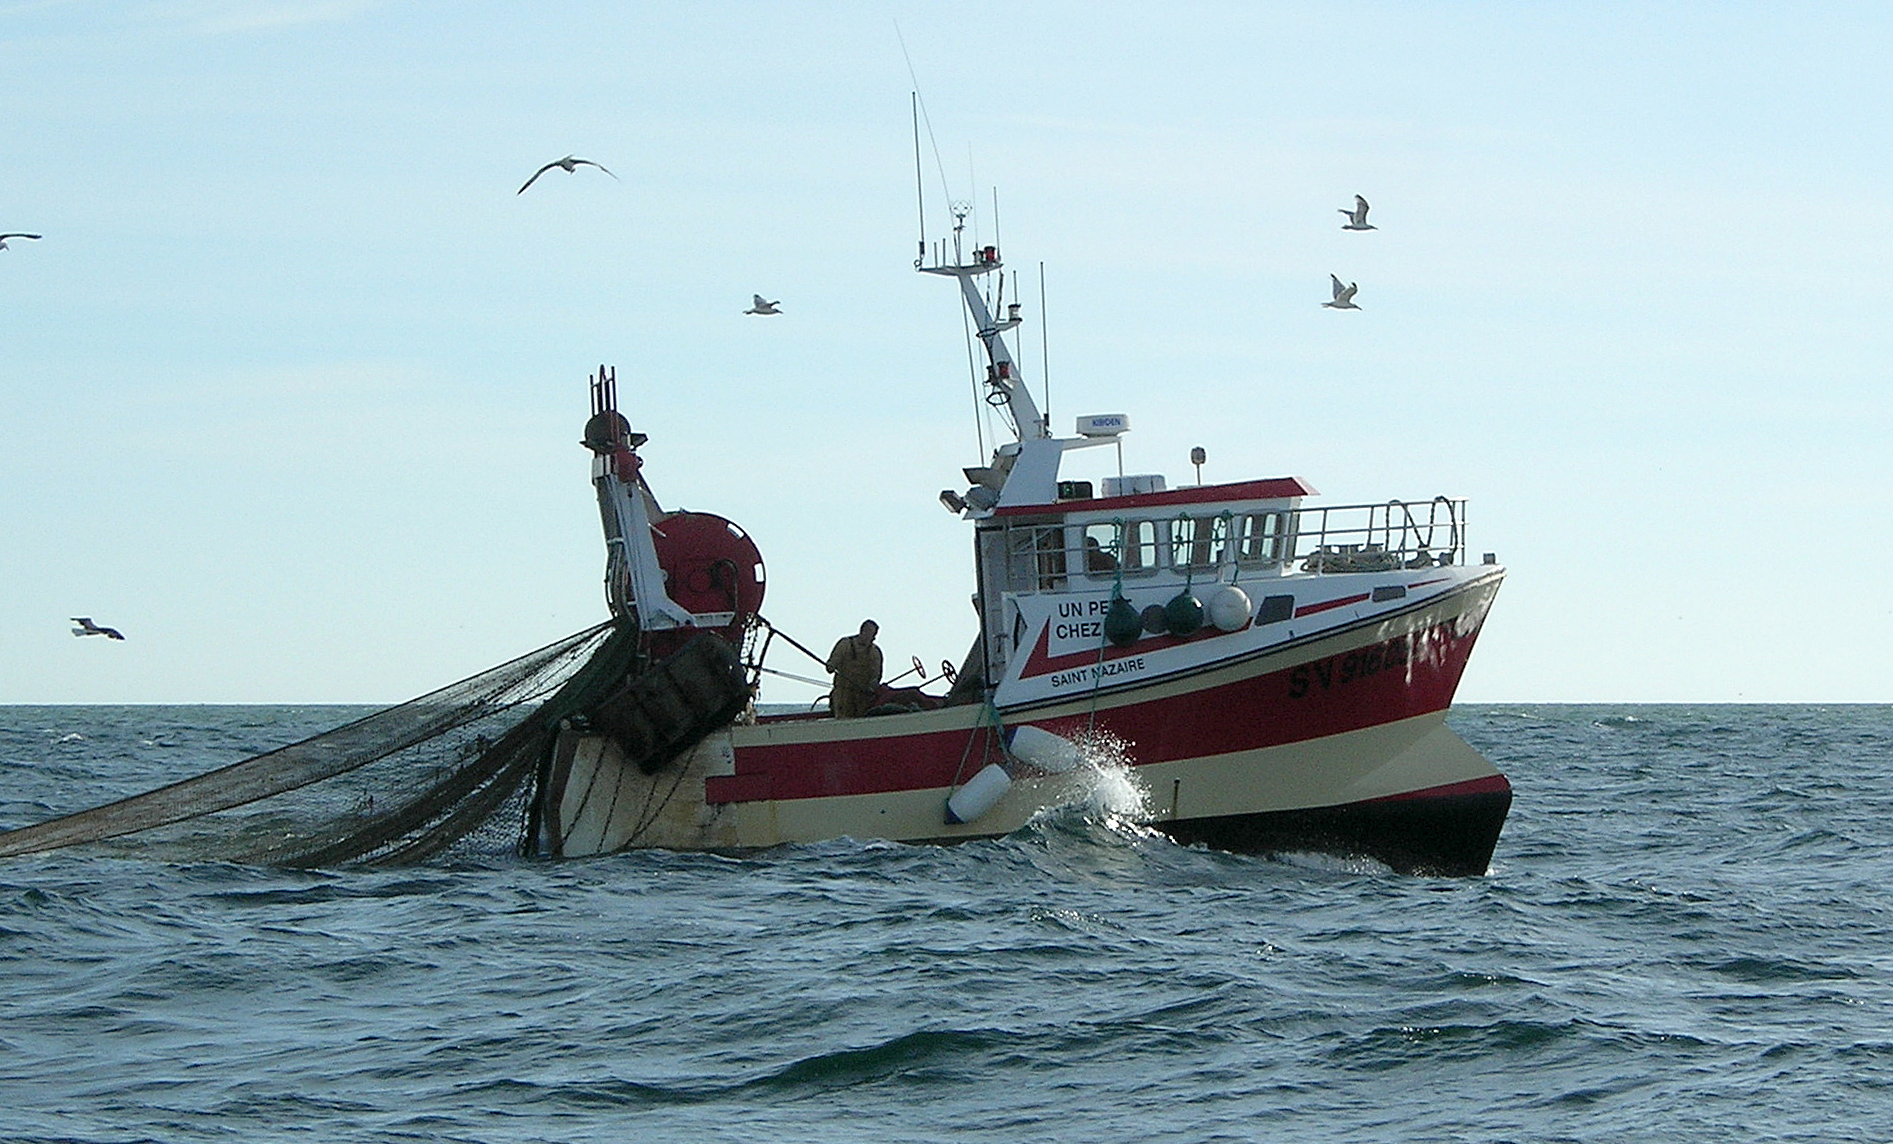 Pesca. (Fto Céréales Killer - wikicommons - cc)